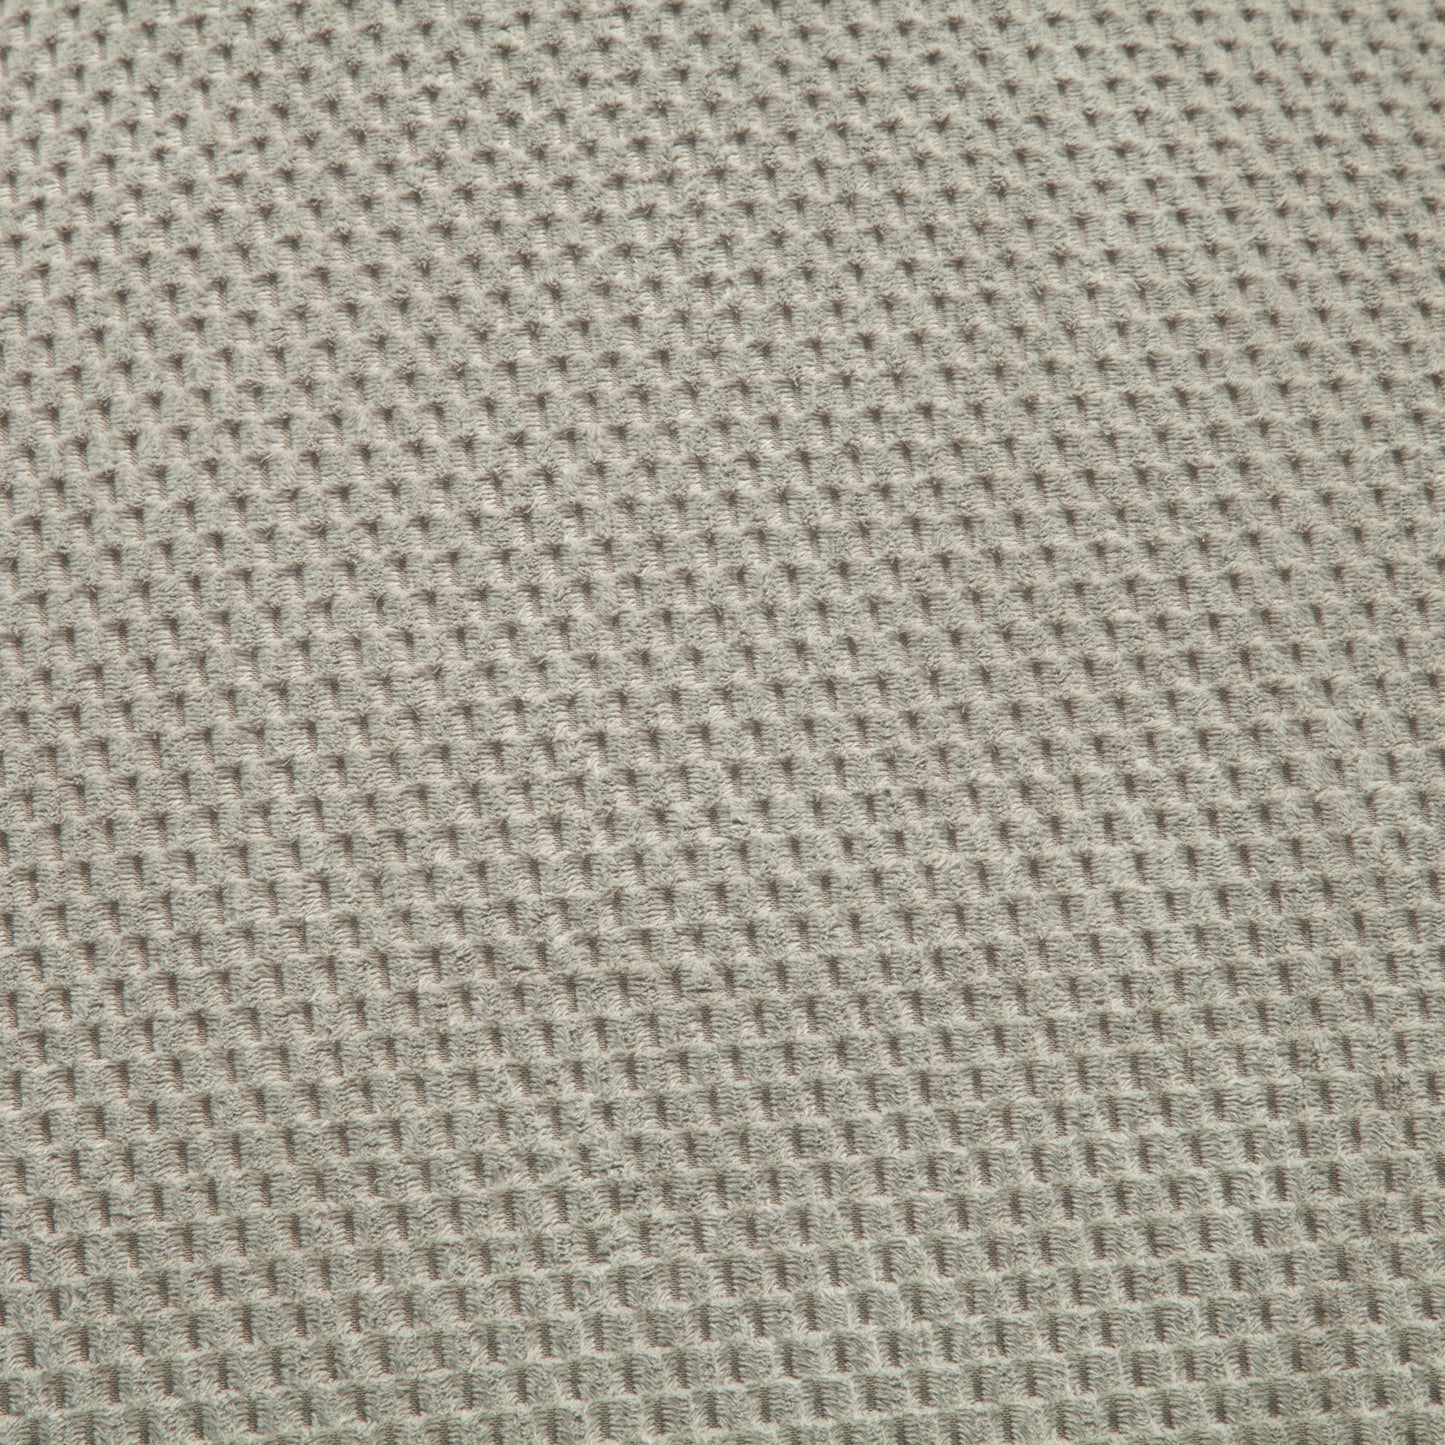 Button Tufted Luxury Futon Pad Grey